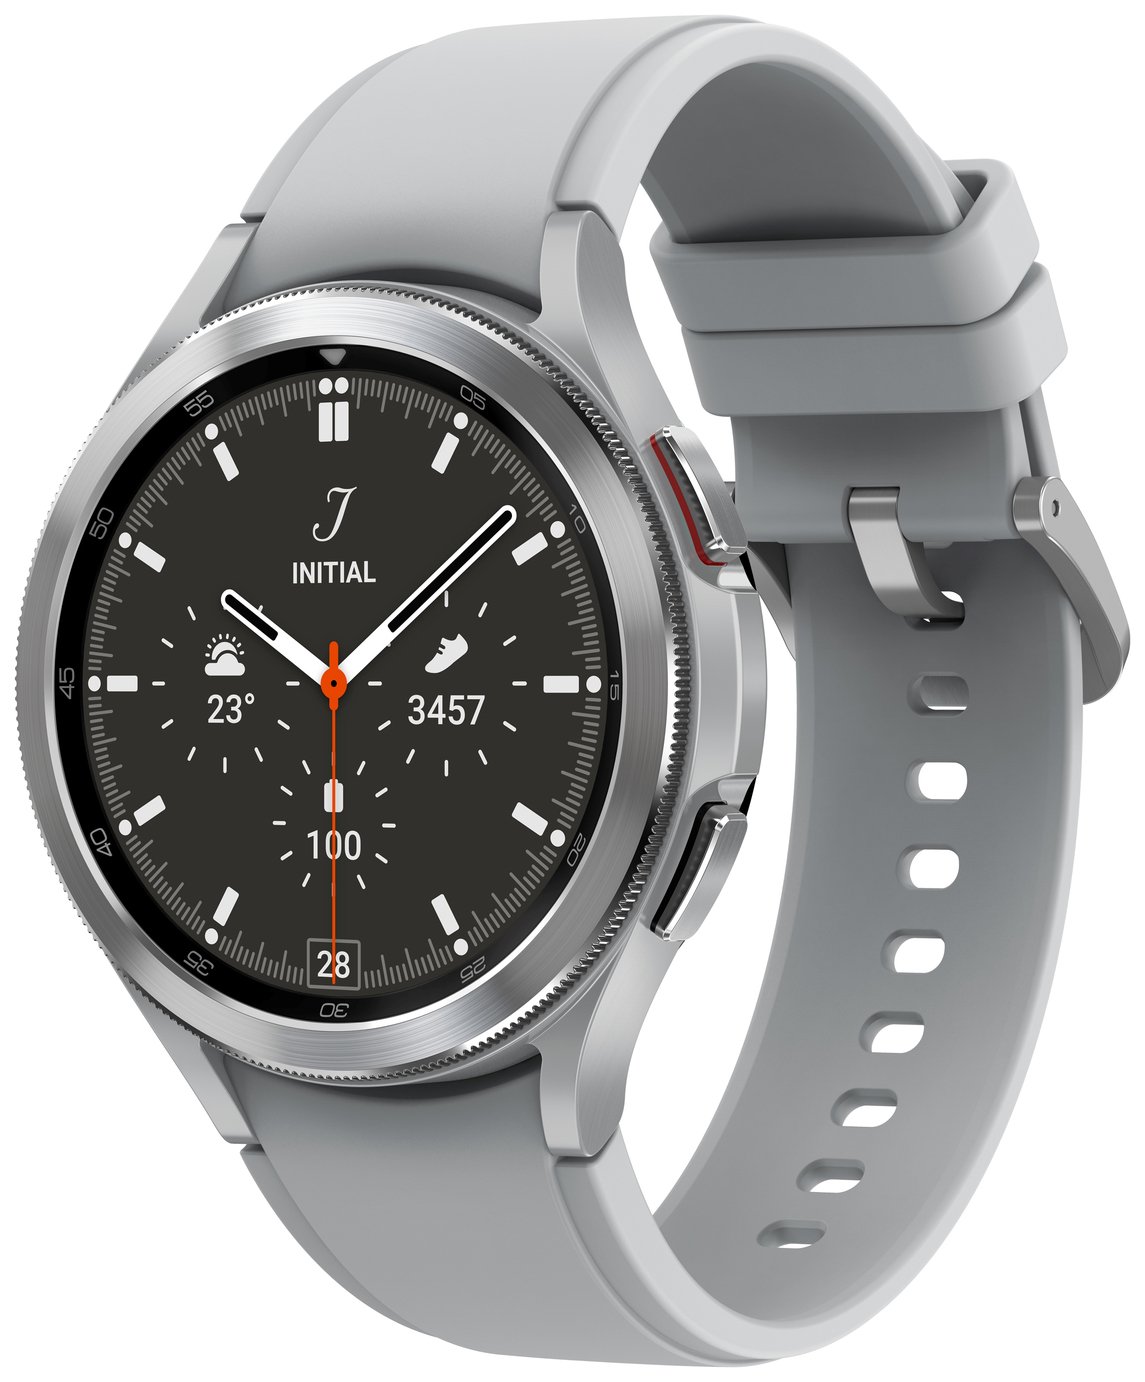 Samsung Galaxy Watch4 Classic 46mm Smart Watch - Silver